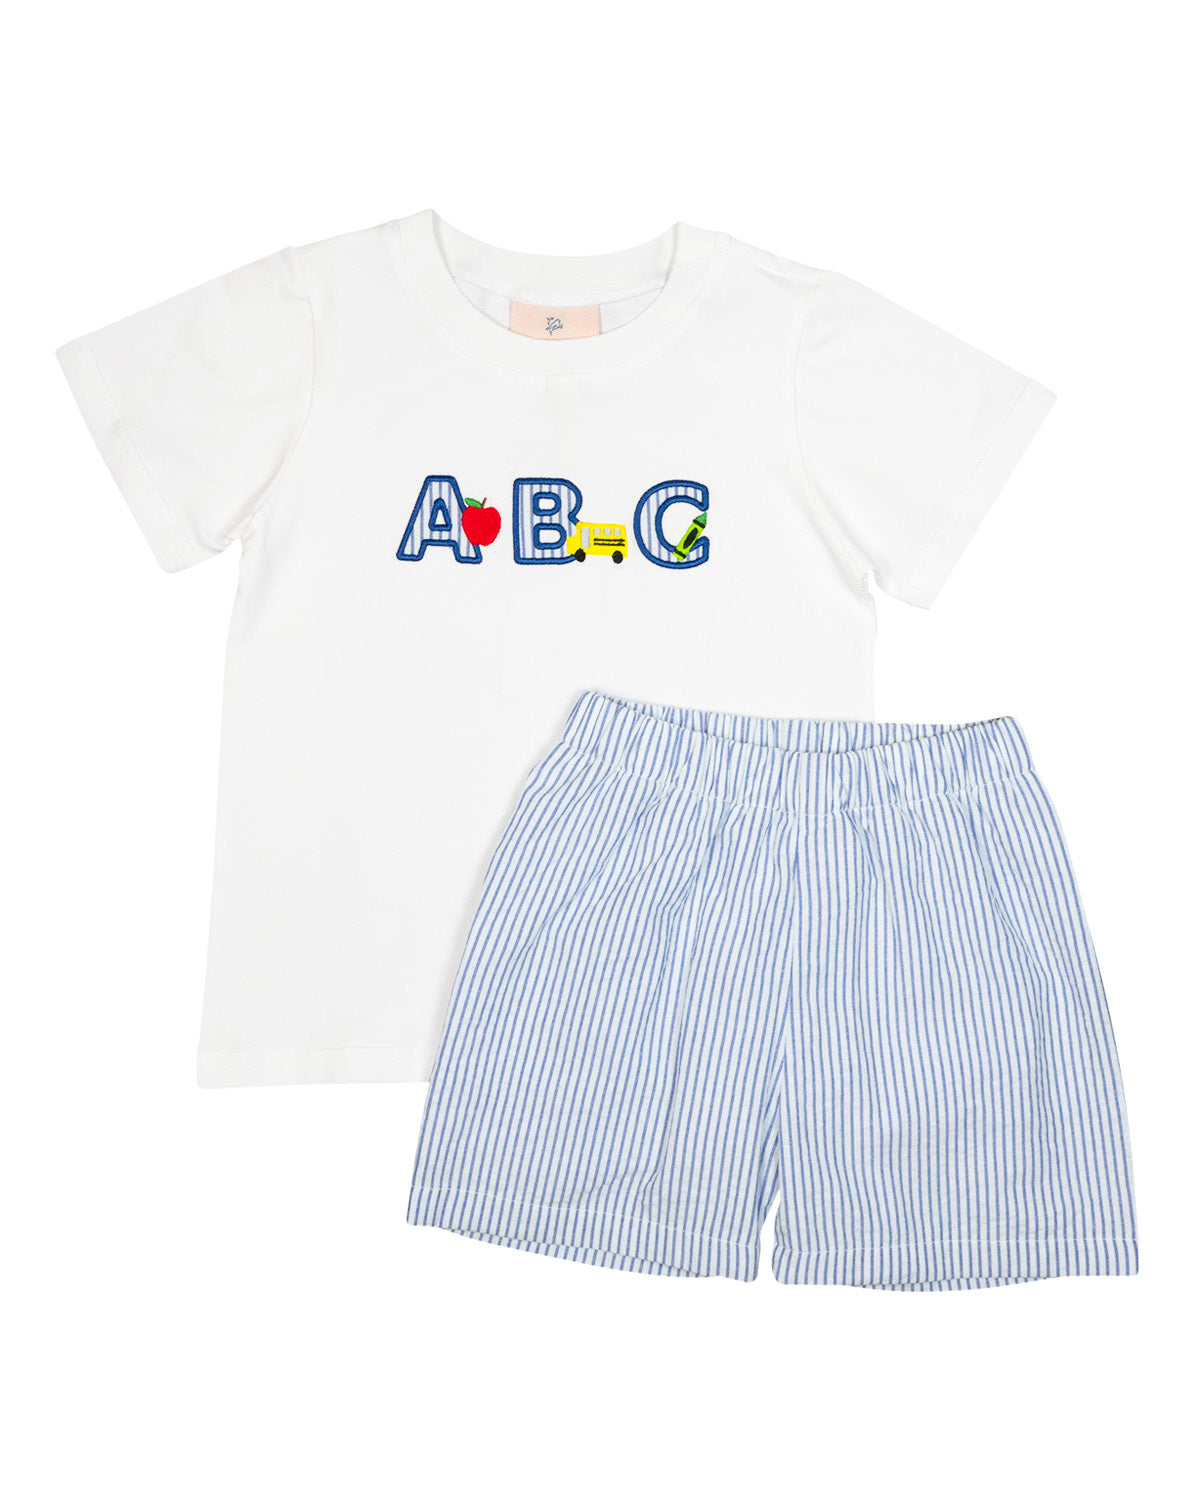 Alphabet Applique Navy Stripes Shorts Set